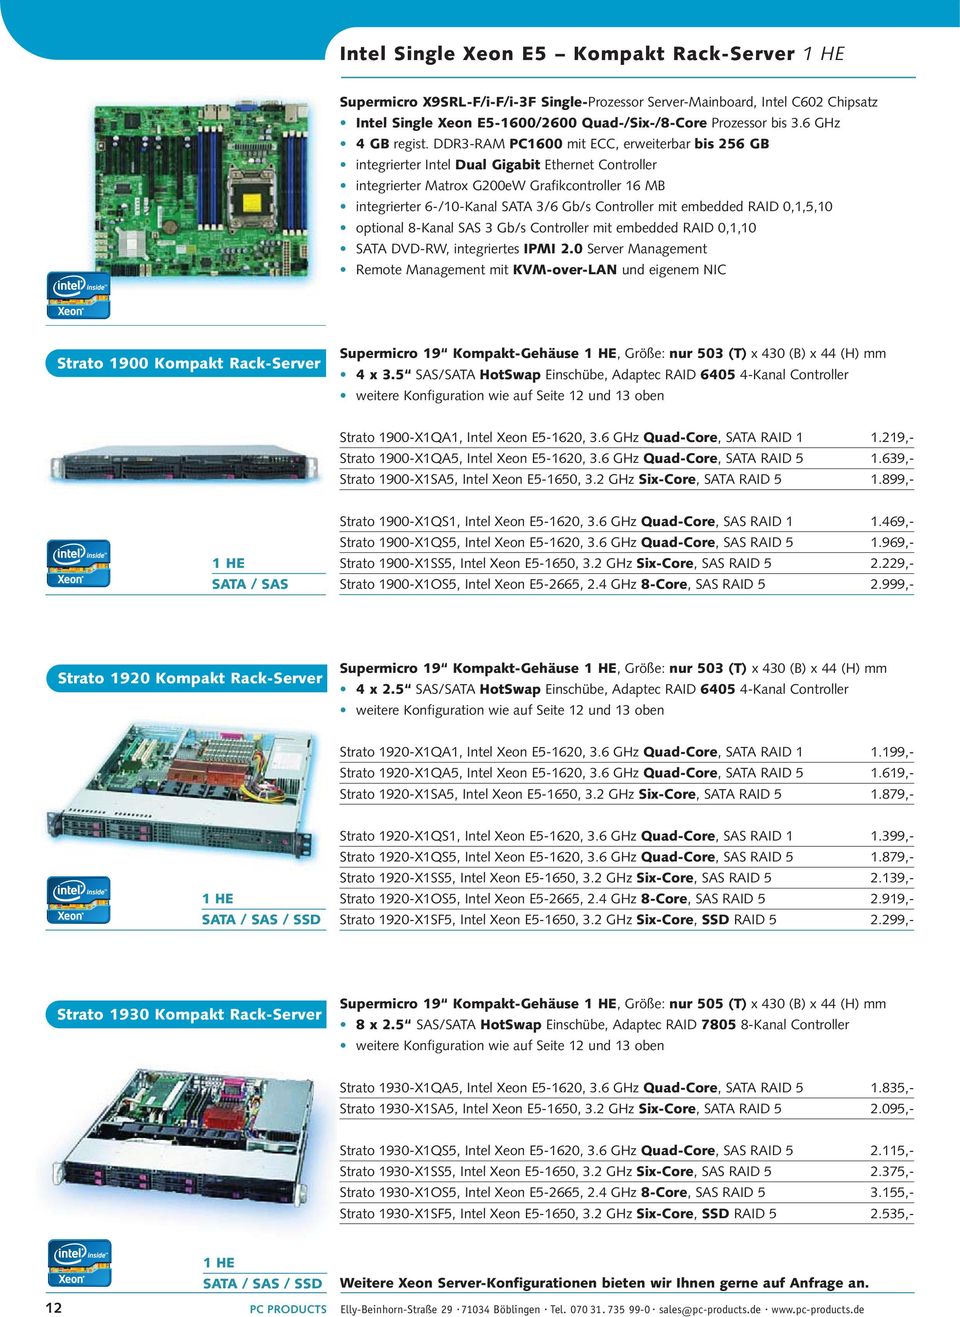 DDR3-RAM PC1600 mit ECC, erweiterbar bis 256 GB integrierter Intel Dual Gigabit Ethernet Controller integrierter Matrox G200eW Grafikcontroller 16 MB integrierter 6-/10-Kanal SATA 3/6 Gb/s Controller